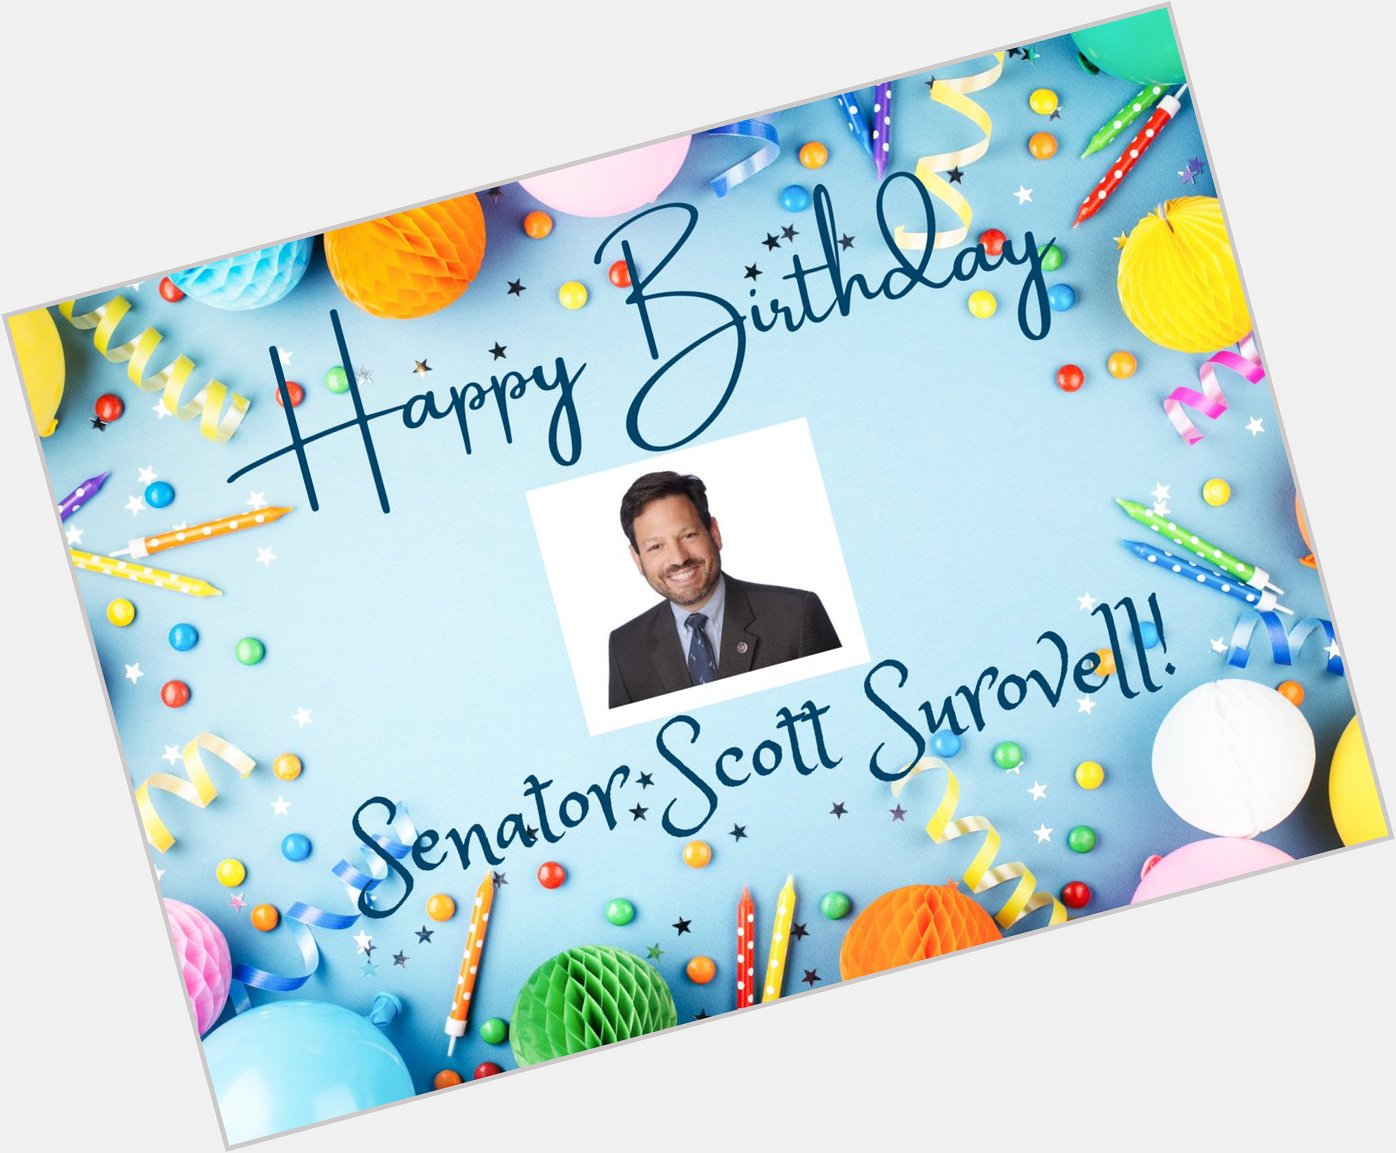 Wishing our Caucus Vice Chairman, Senator Scott Surovell a very happy birthday! 